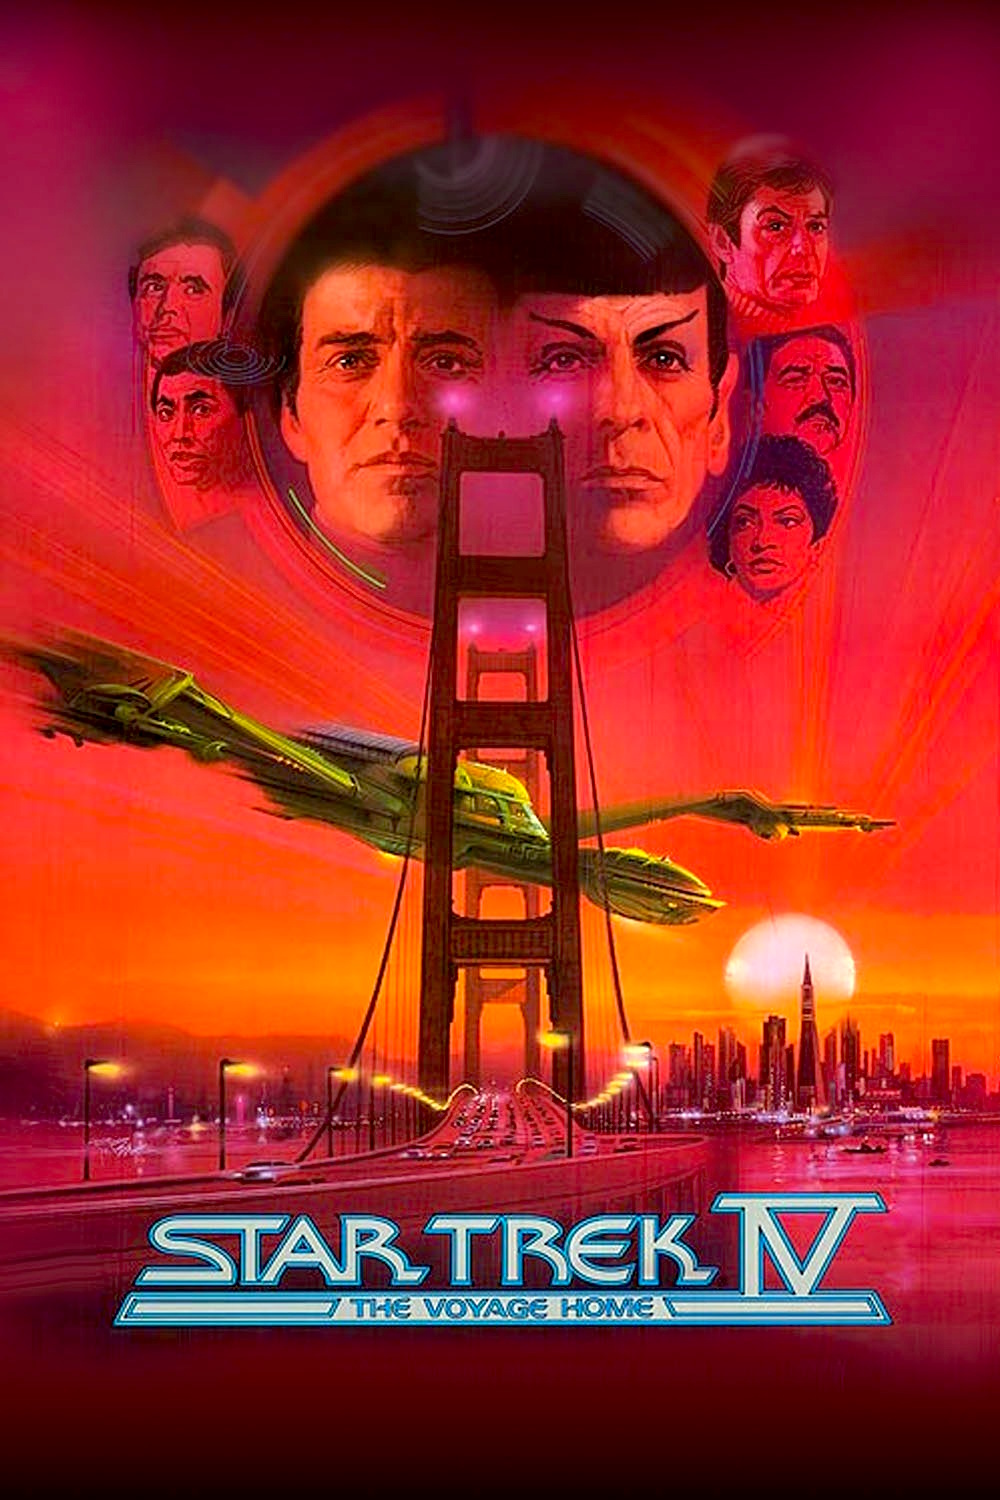 STAR TREK IV: THE VOYAGE HOME (1986)